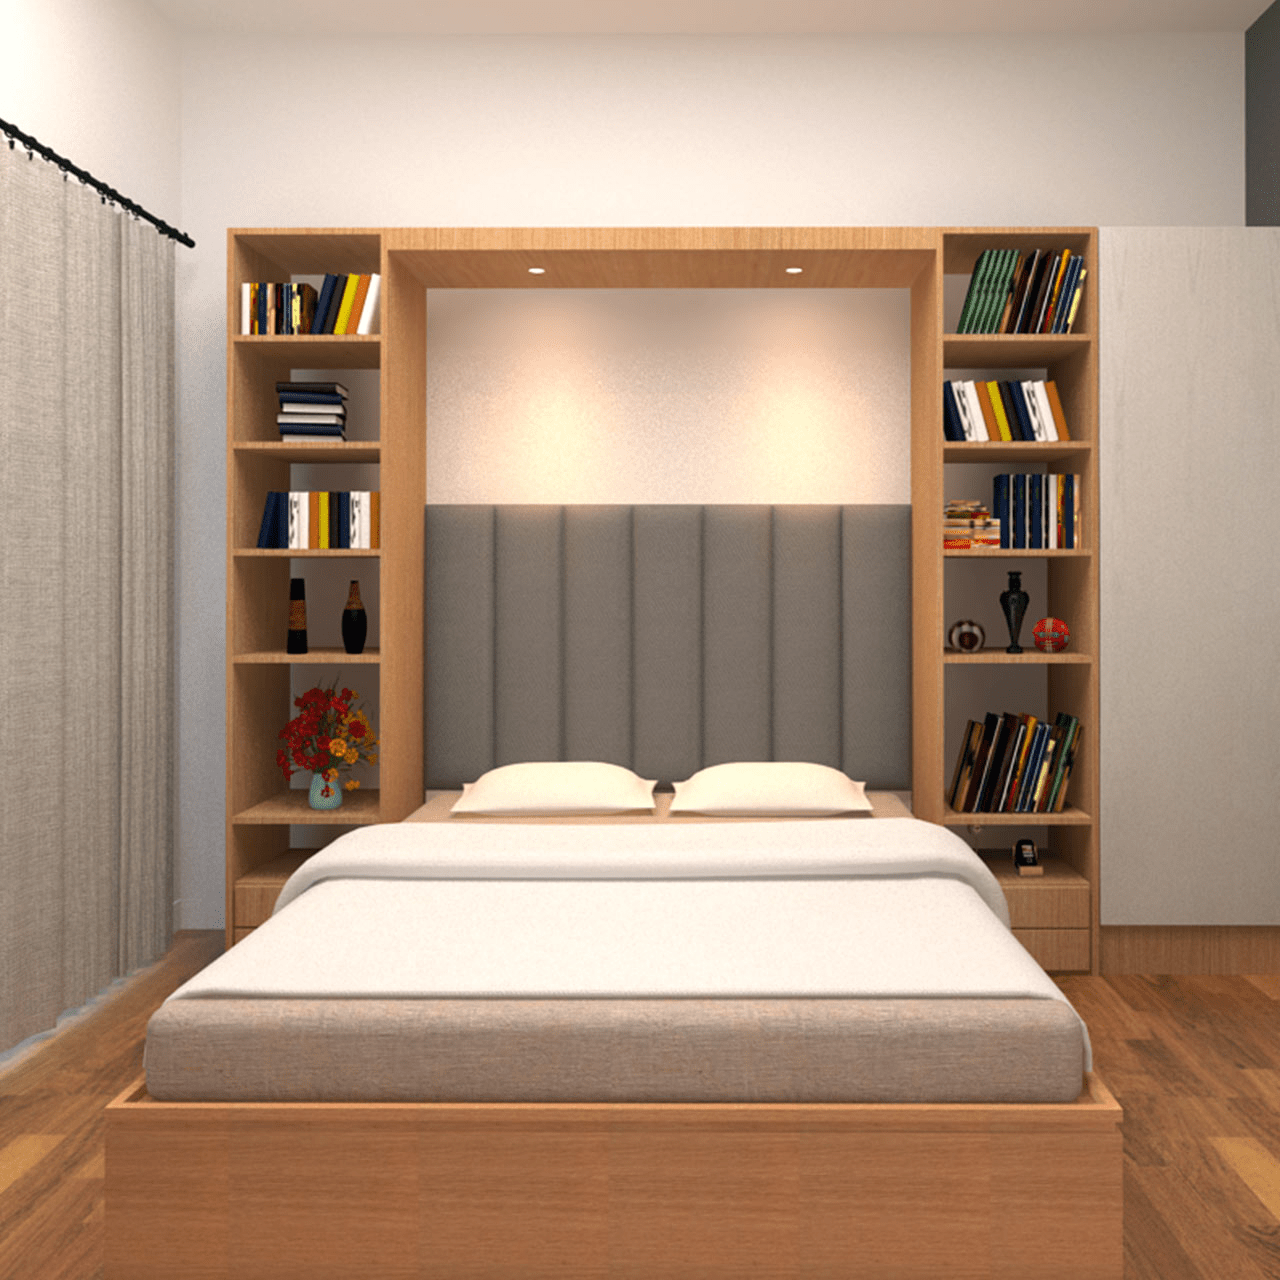 Ide headboard kamar tidur yang unik